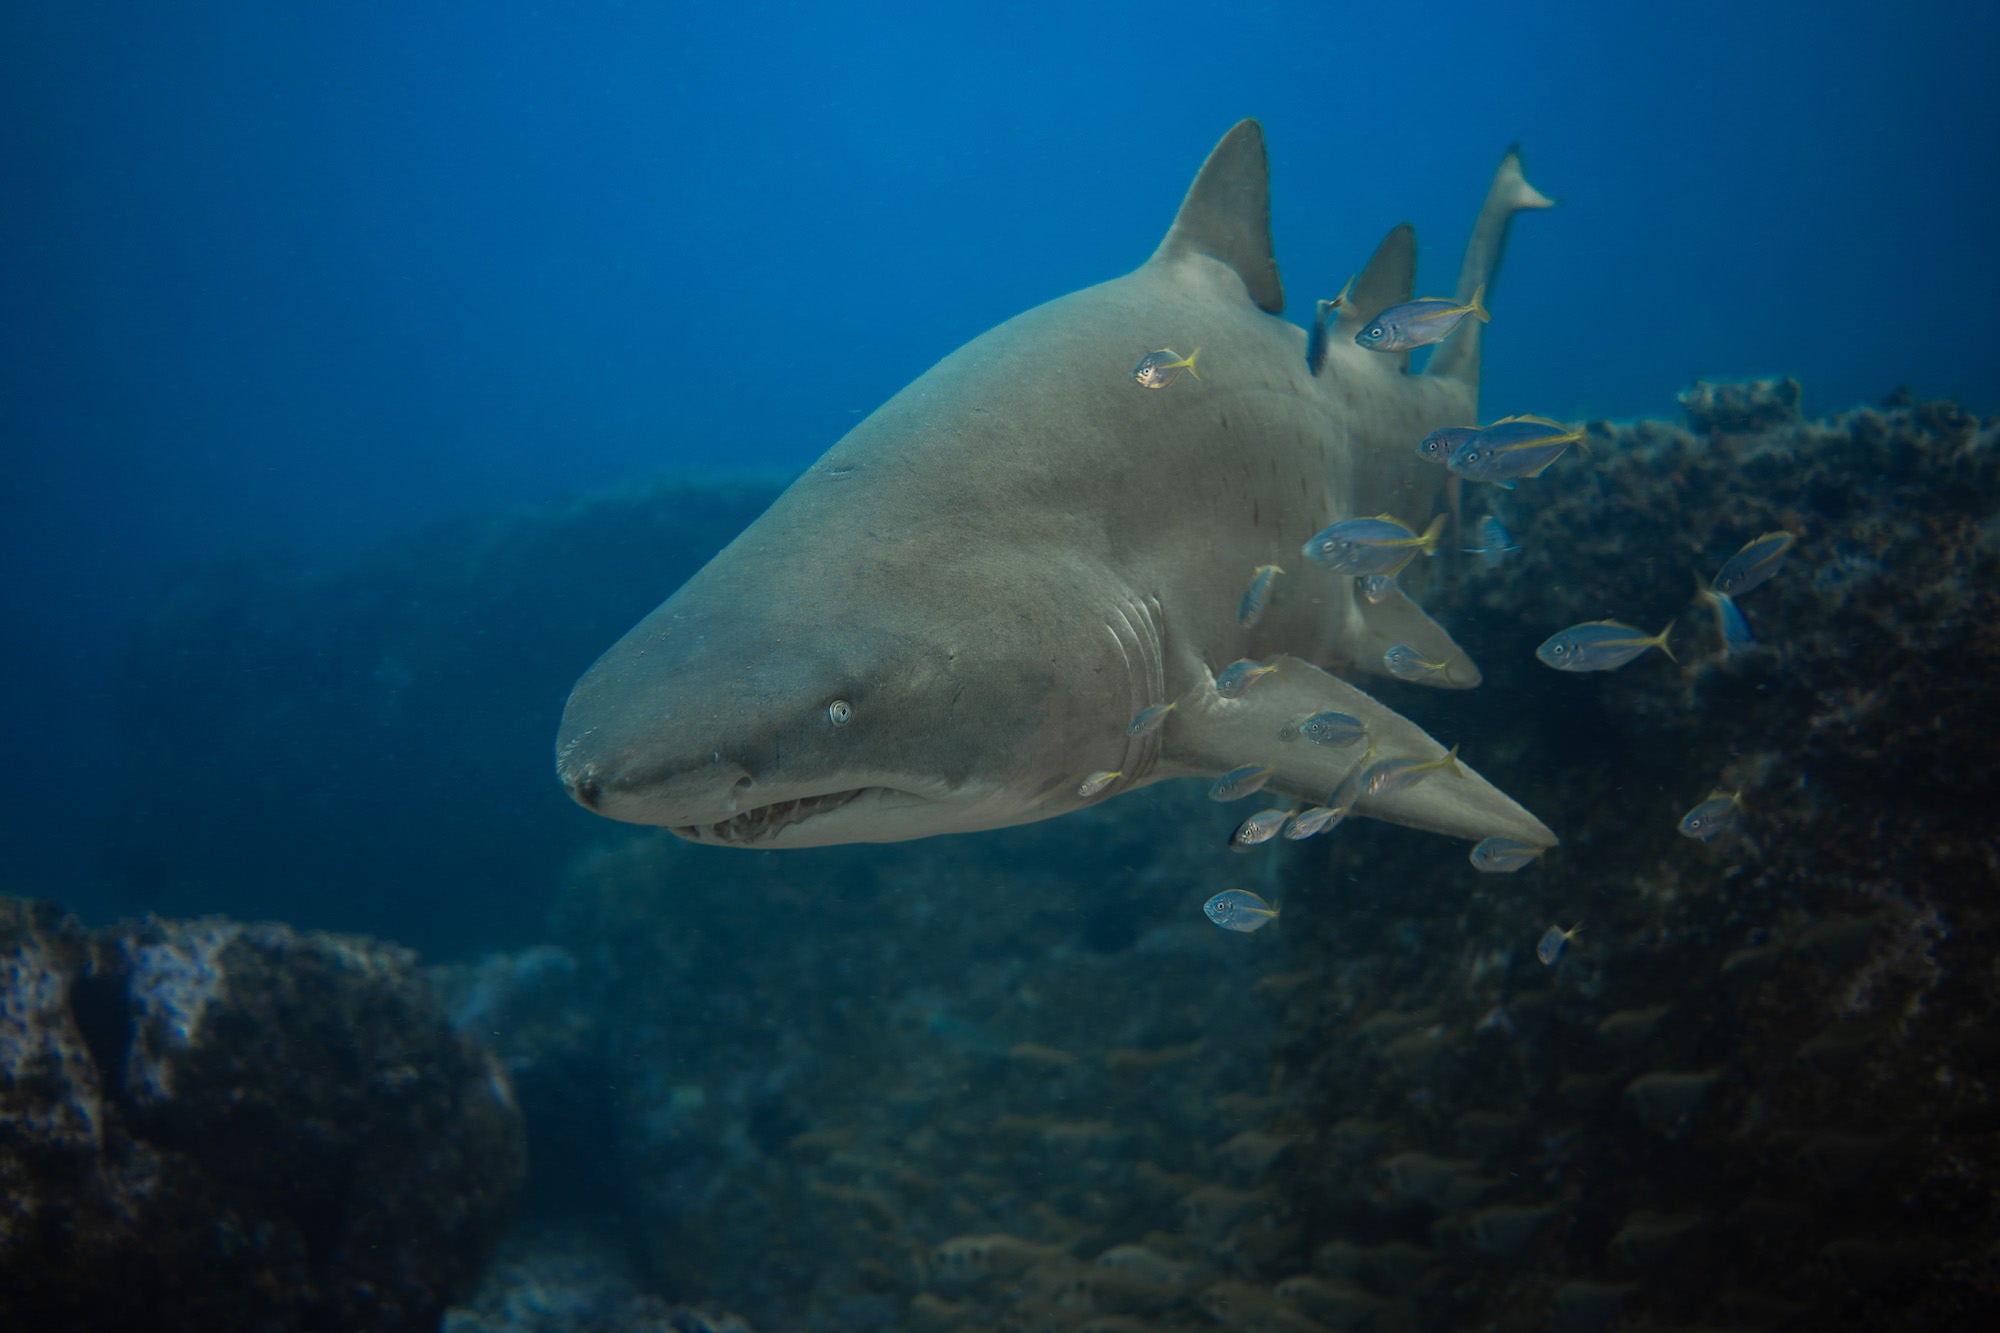 Photo by Gillian “Shark” Fischer. Sony Alpha 7 III. Sony 35mm f/2.8. 1/40-sec., f/2.8, ISO 125